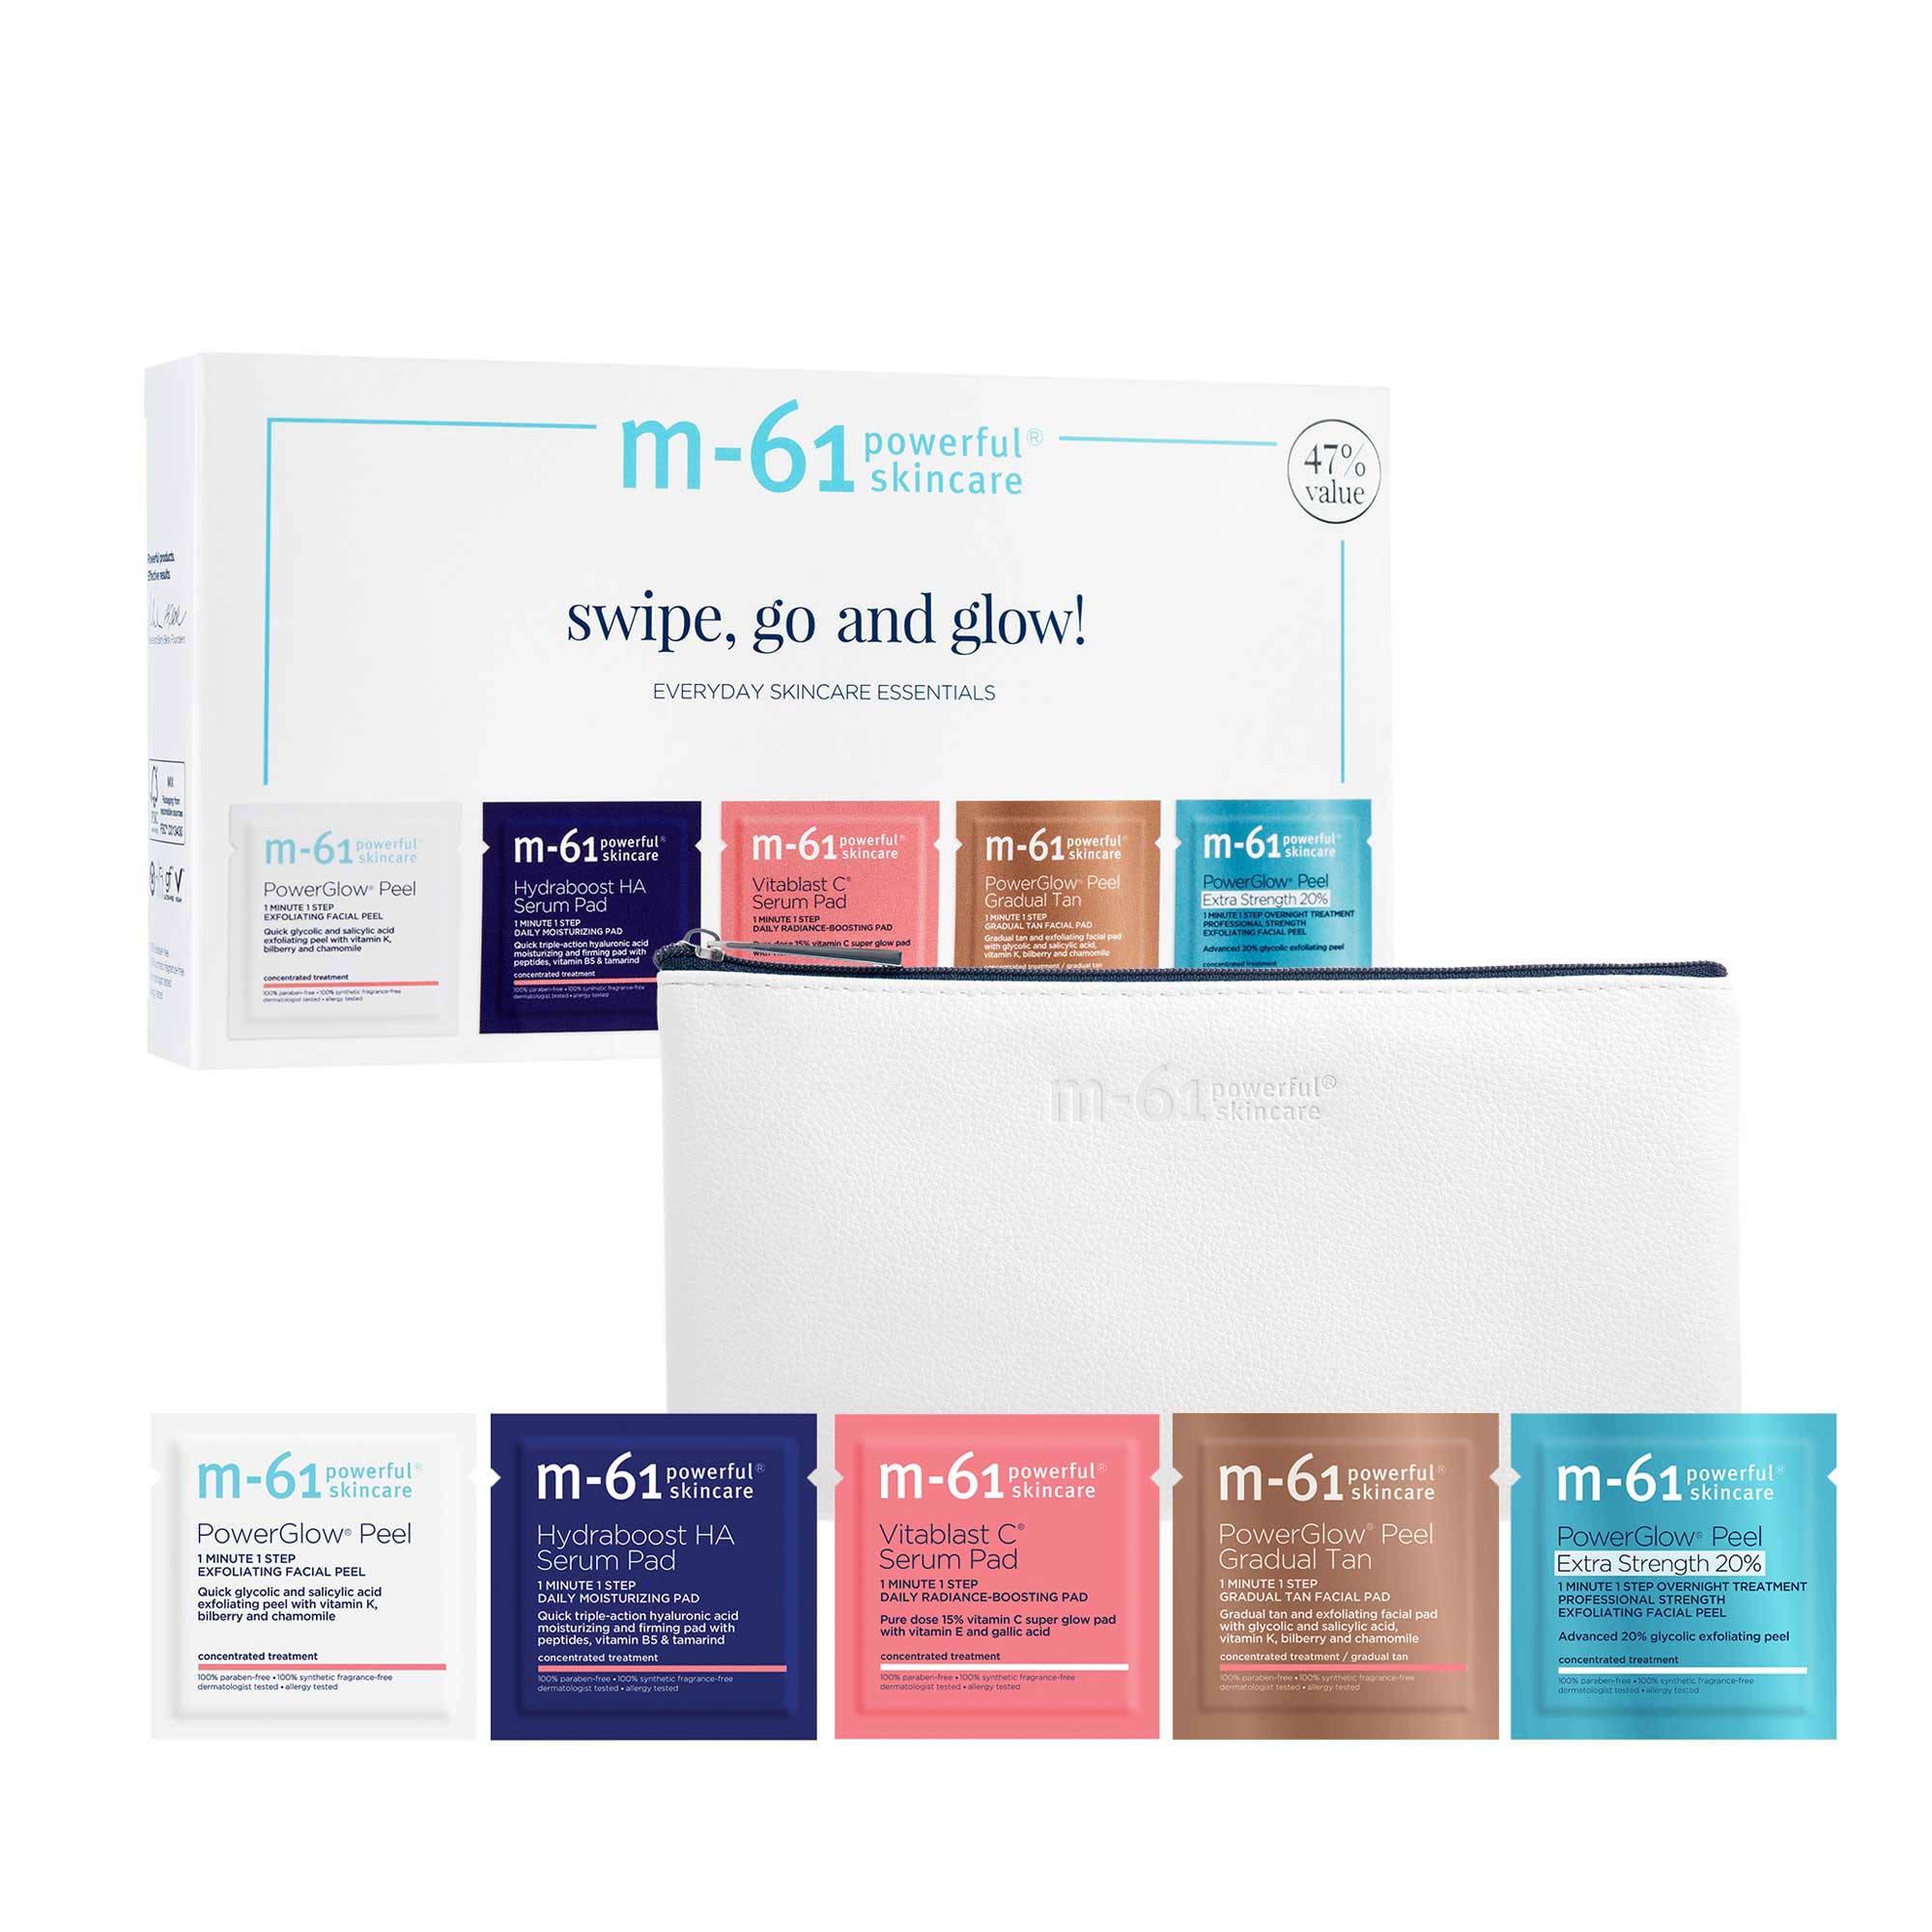 Swipe, Go and Glow! Skincare Set – m-61 powerful skincare